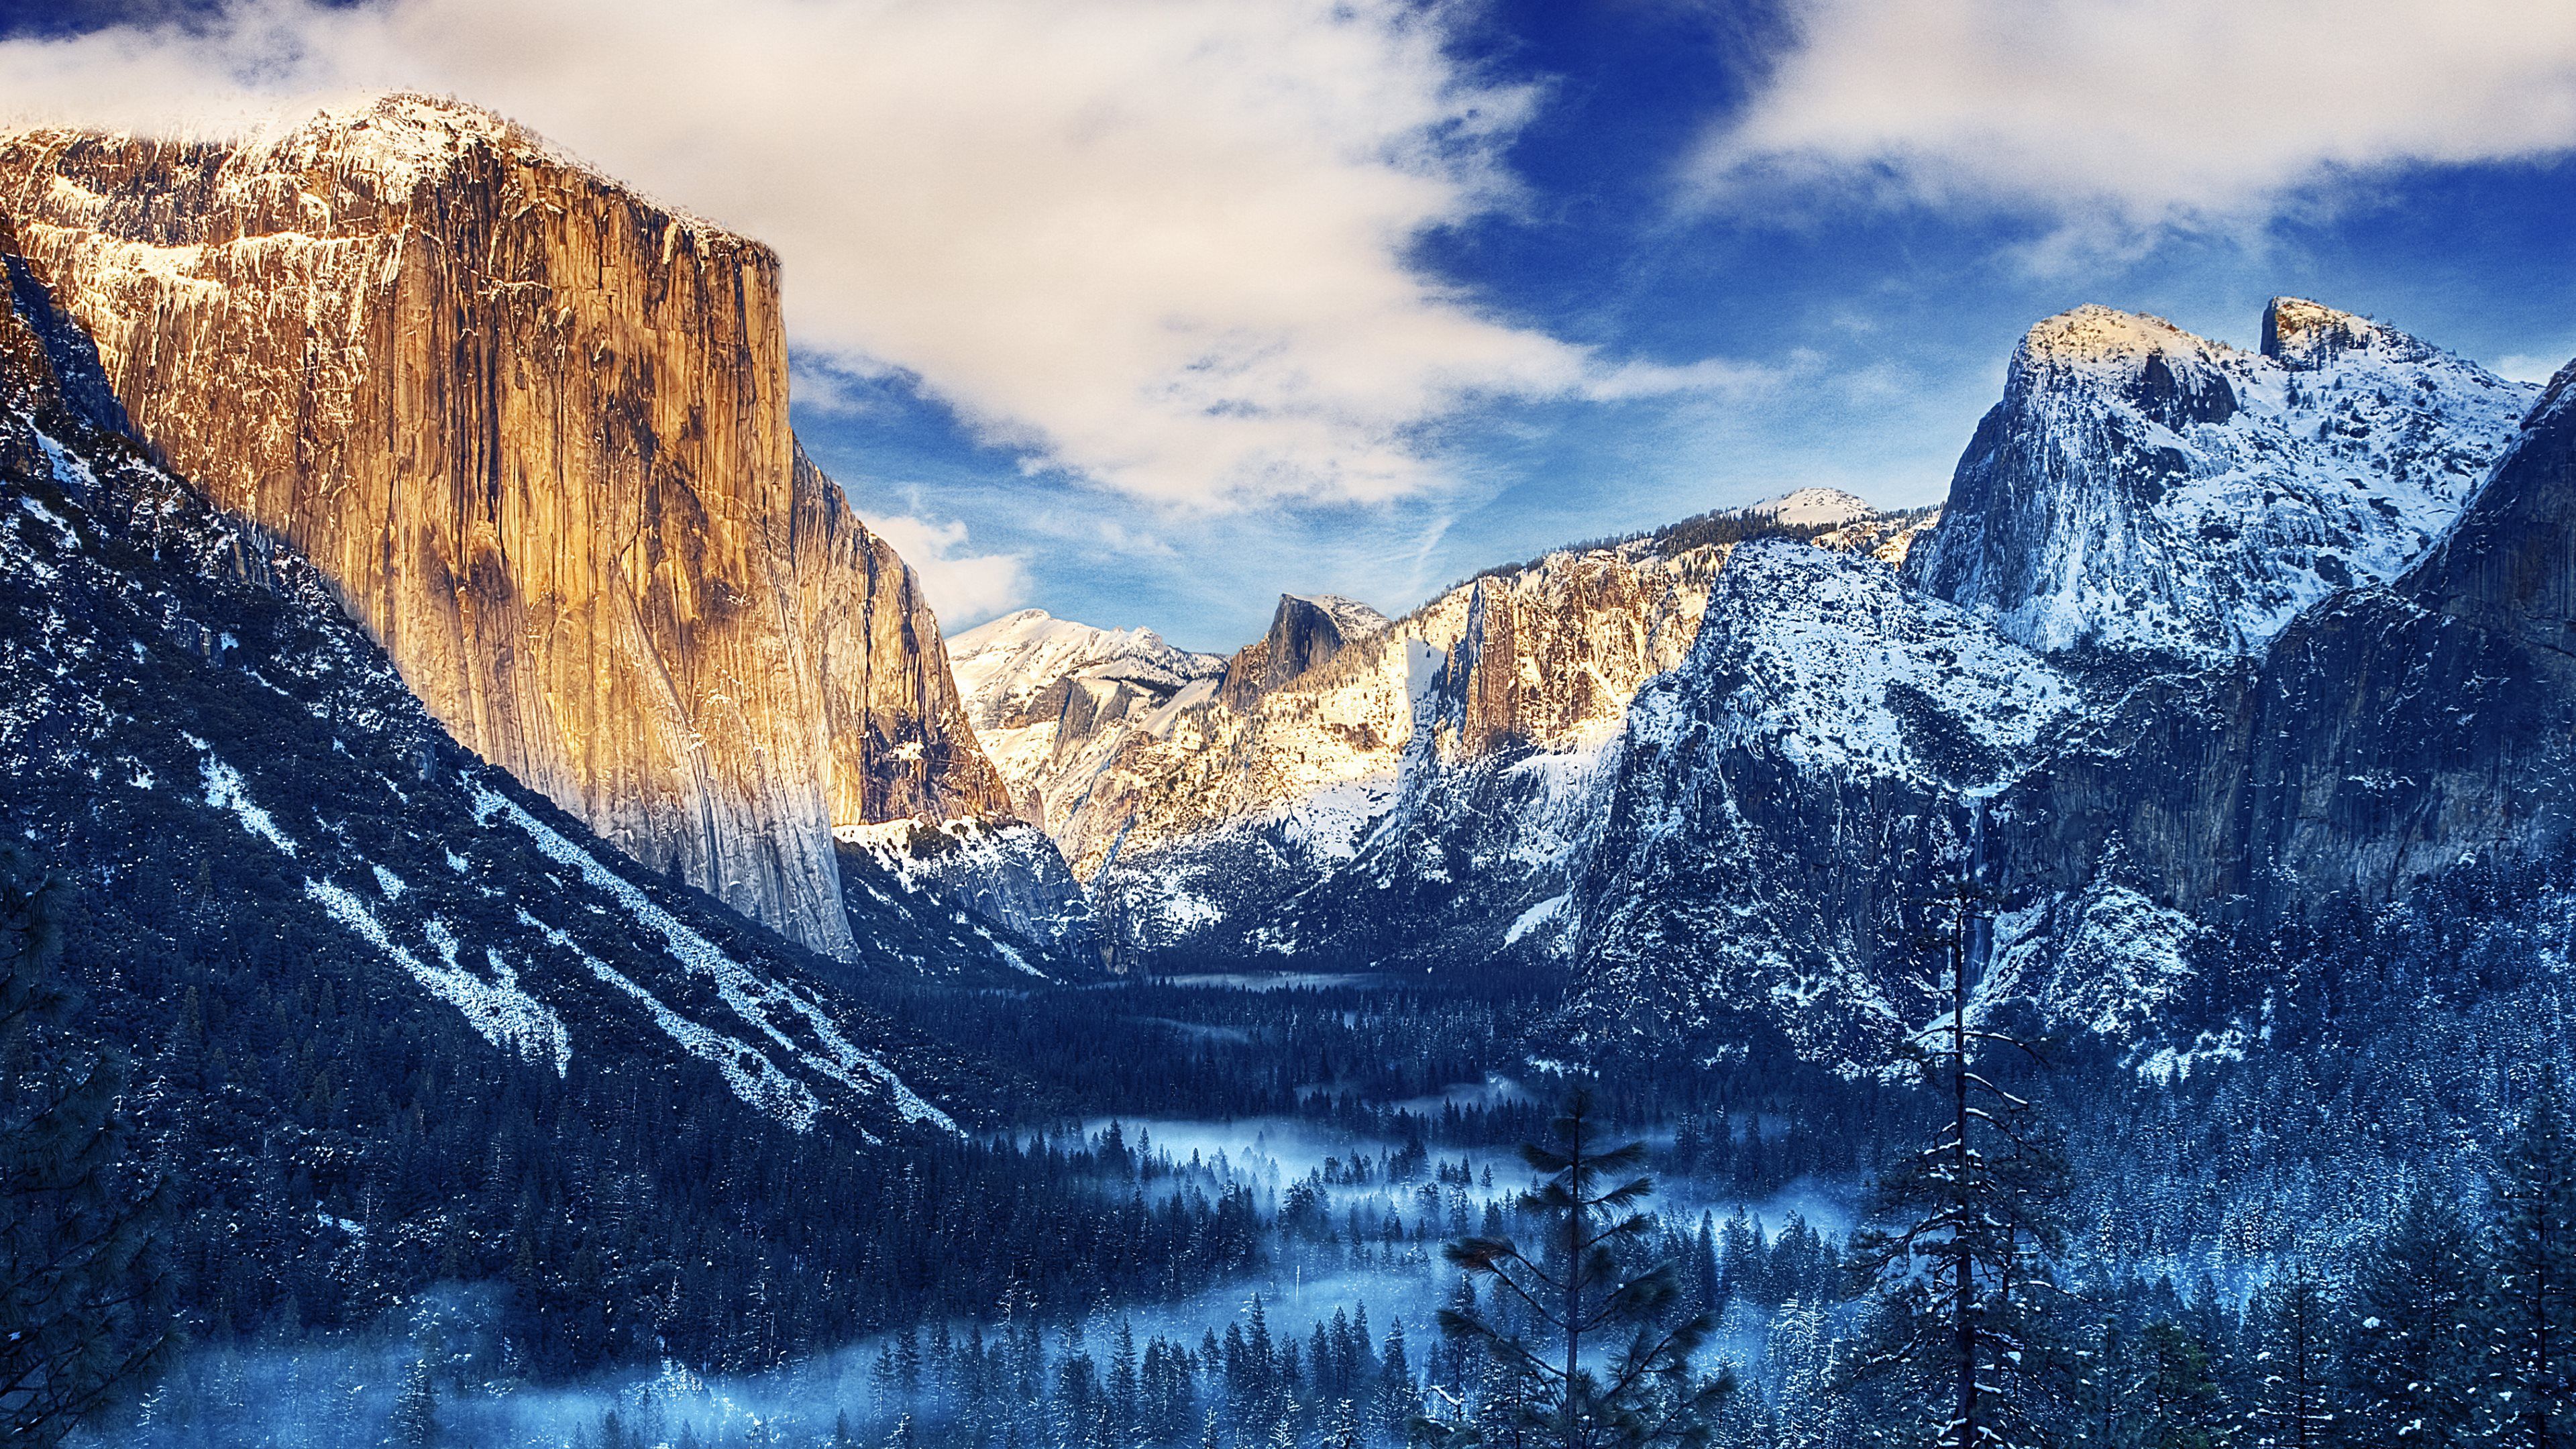 Yosemite Snow 4K Wallpaper Free .wallpaperaccess.com